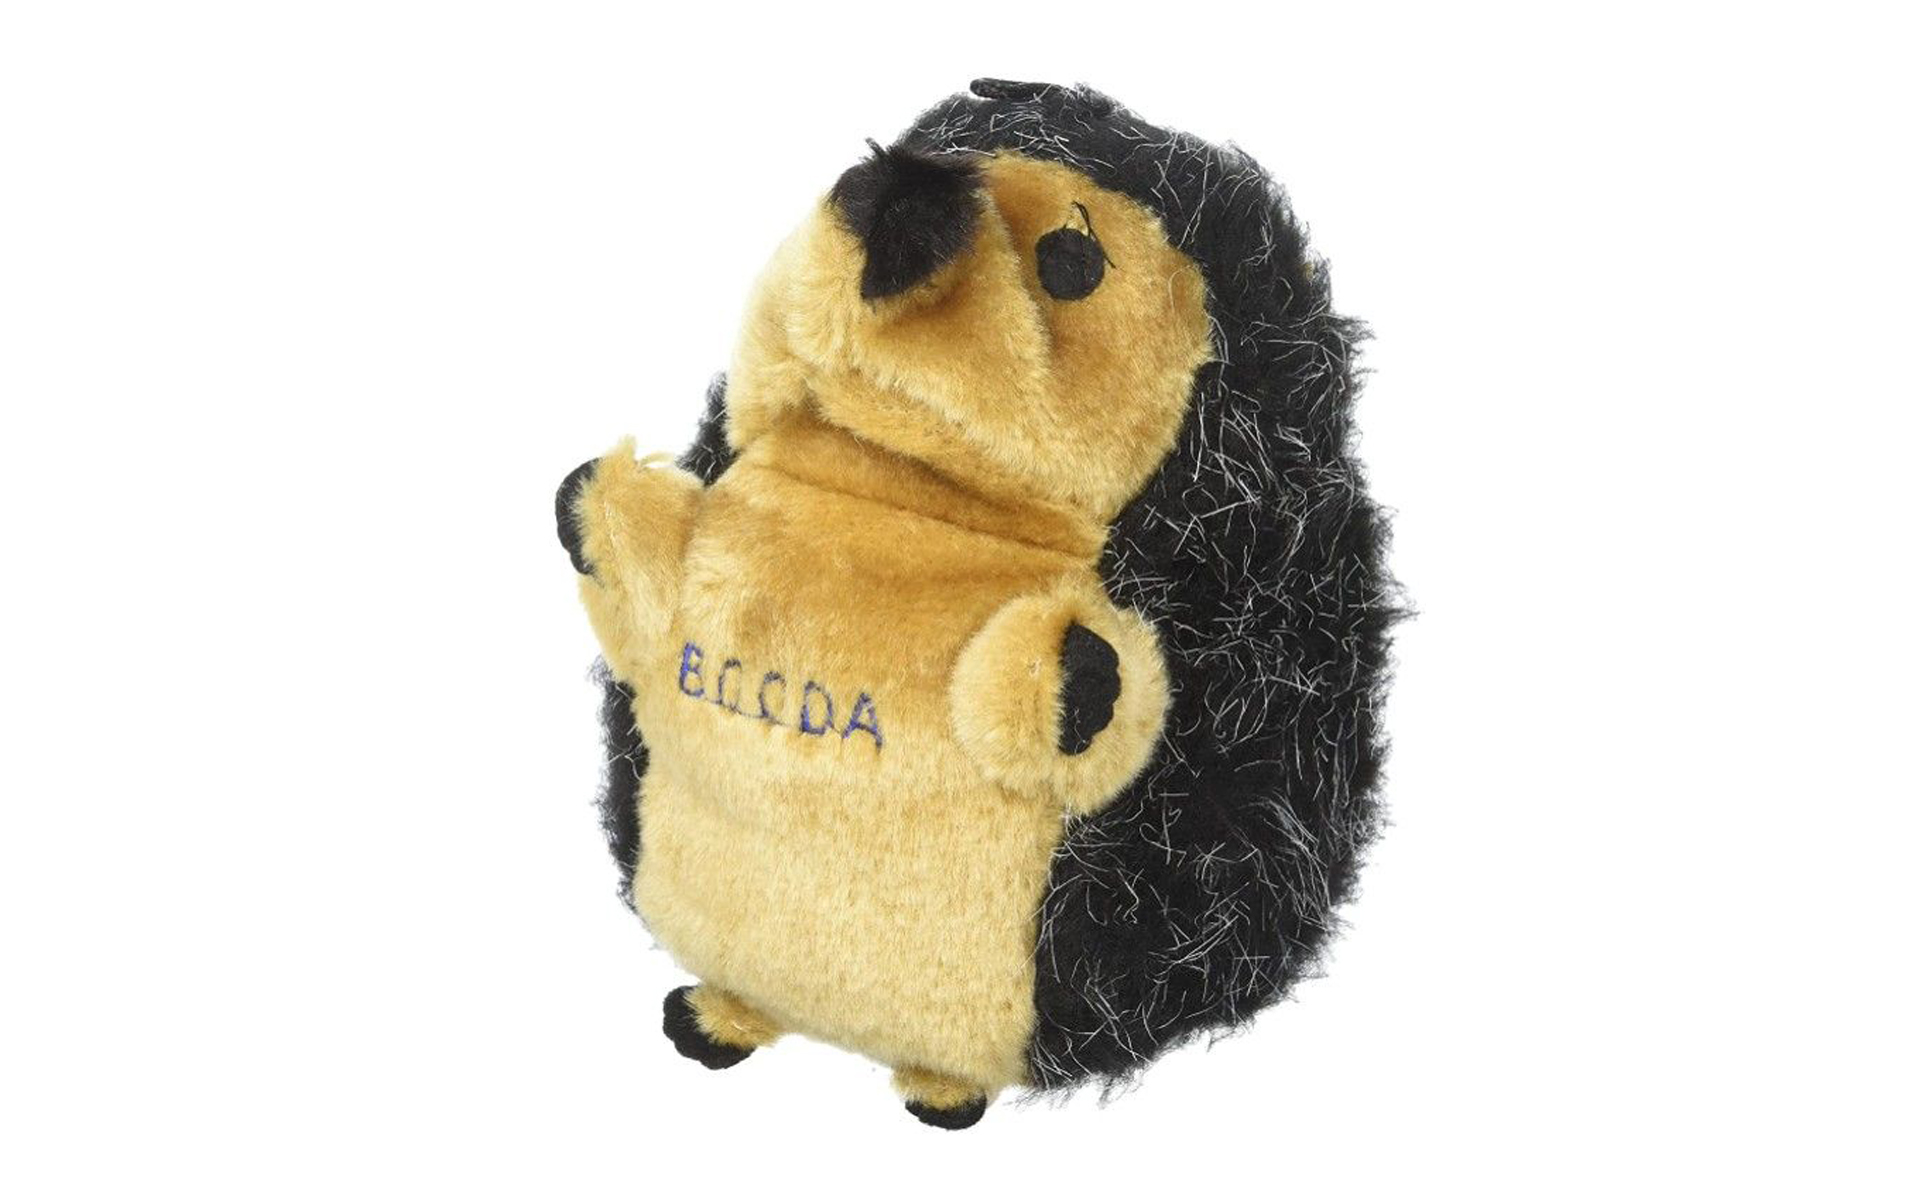 Petmate Booda Zoobilee Plush Hedgehog Dog Toy